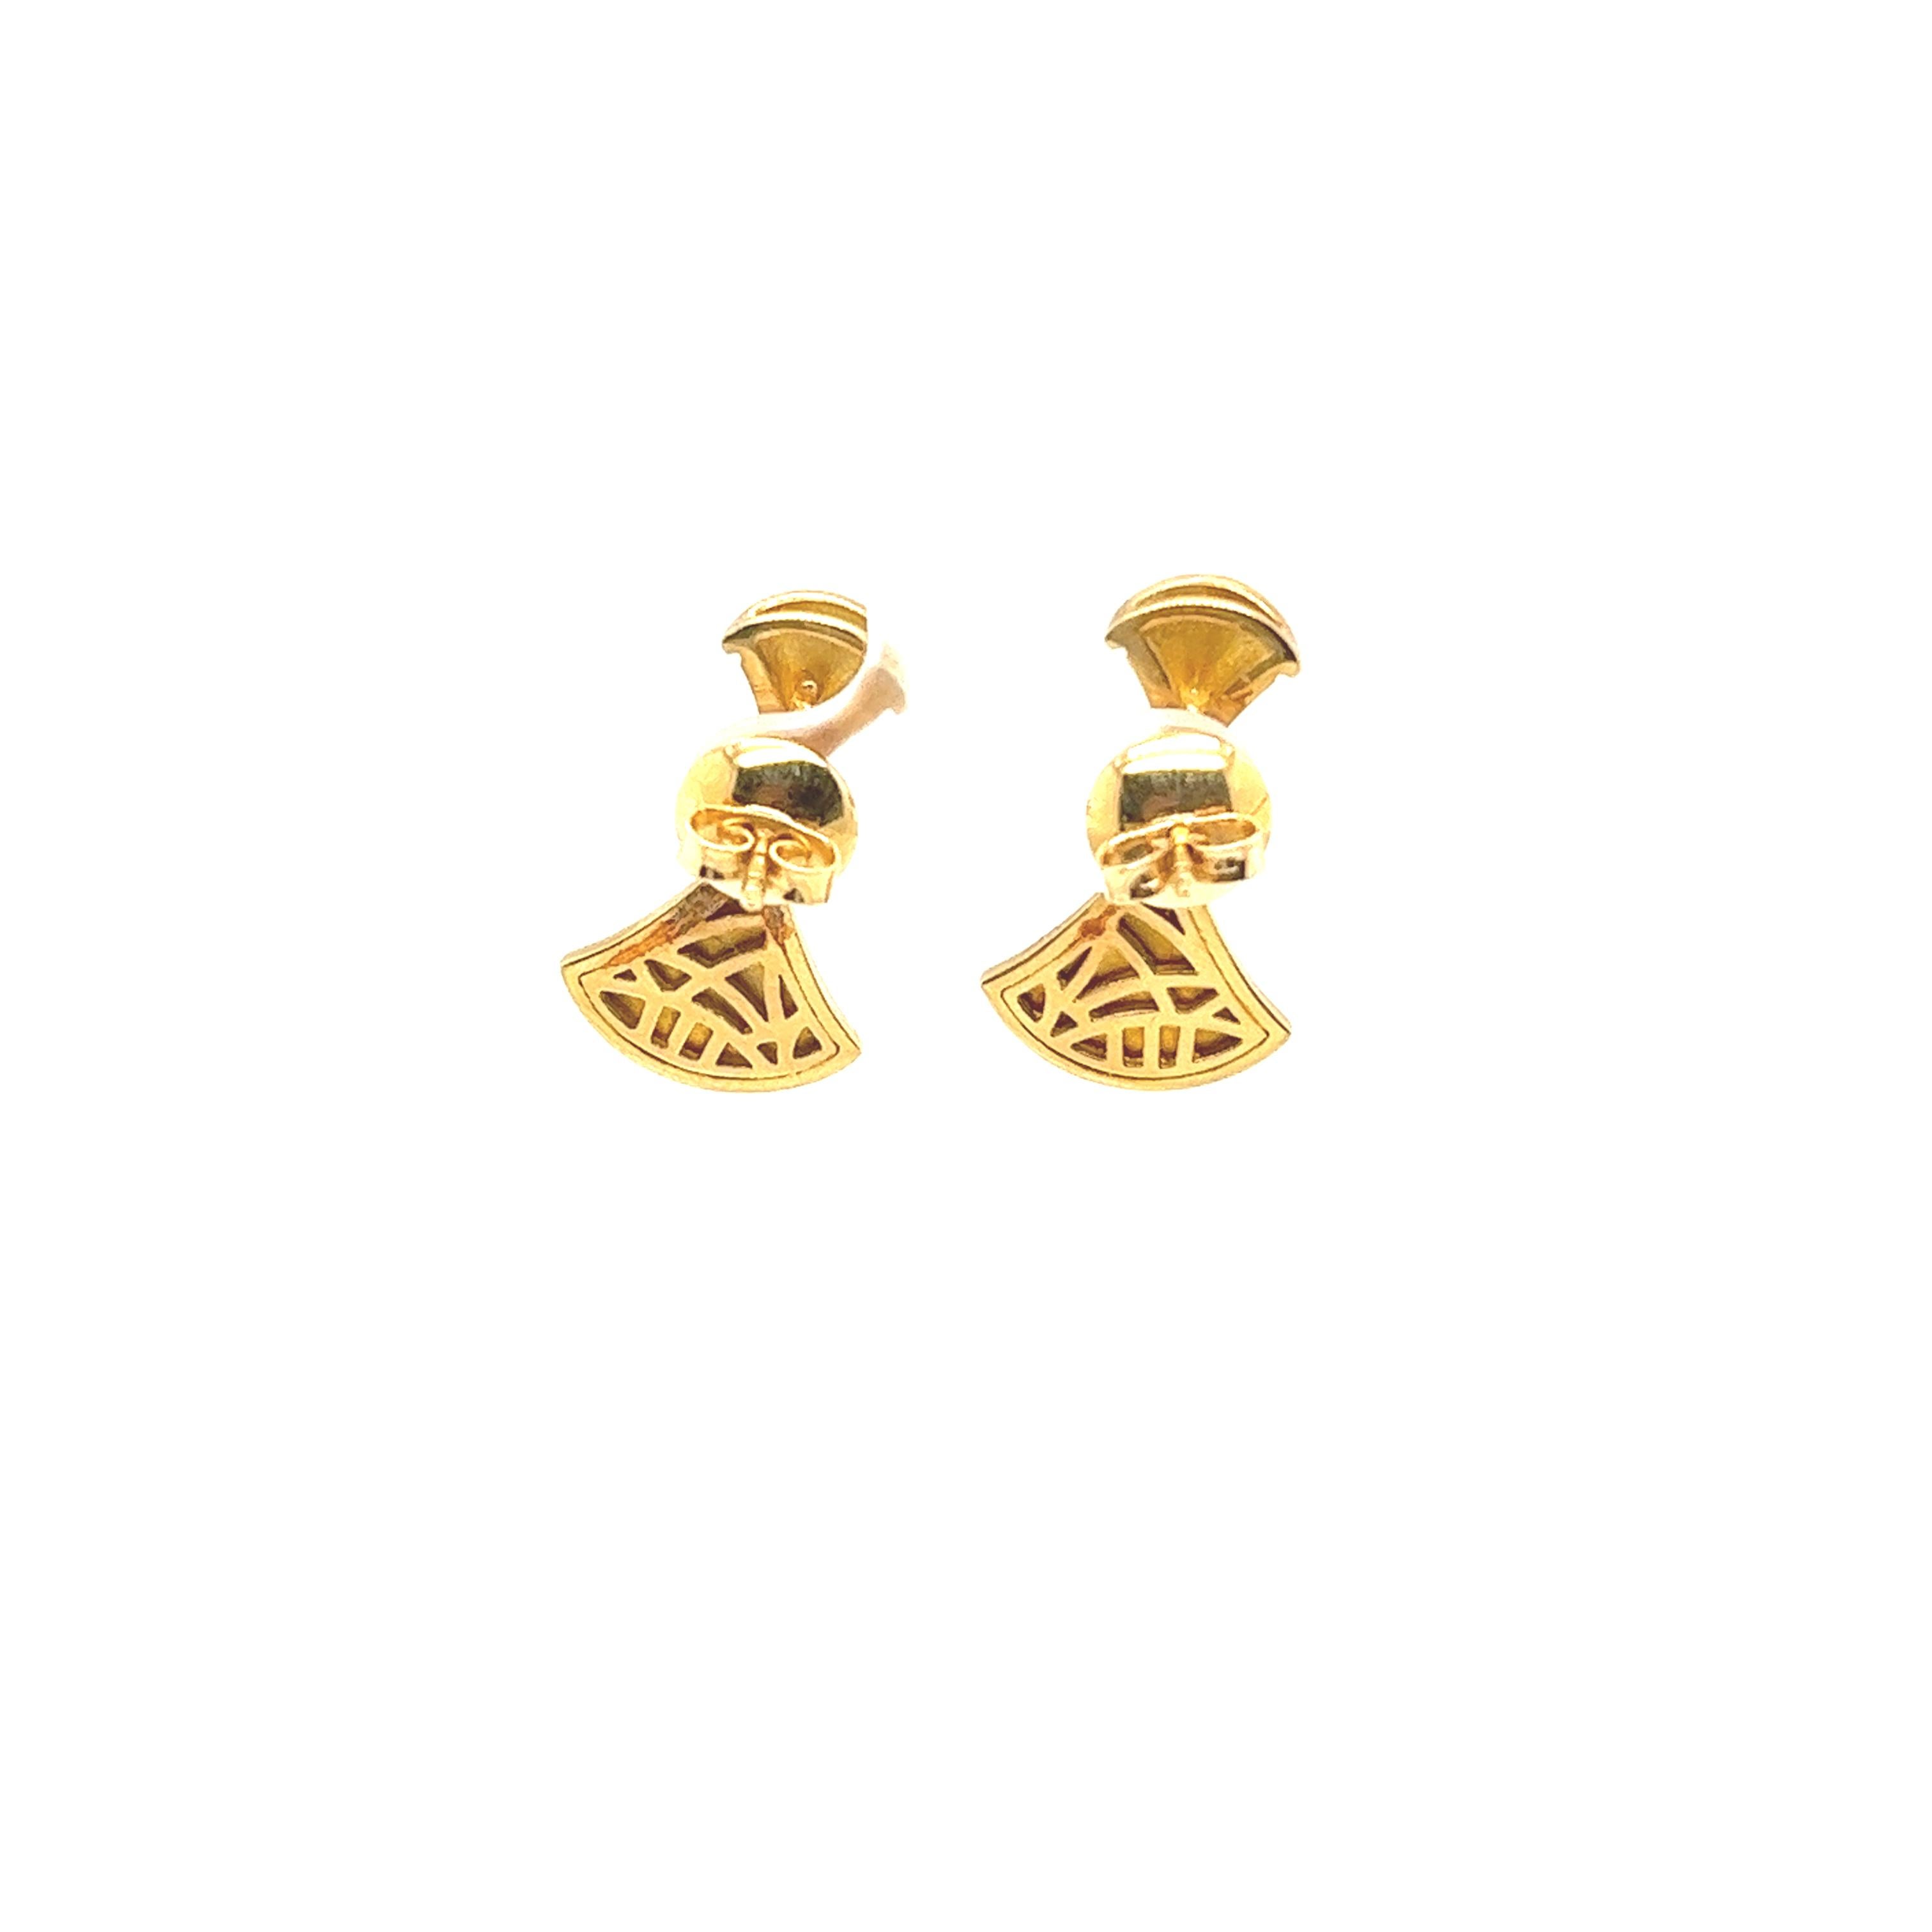 Fine Quality Fan Shape Diamond Earrings in 18ct Yellow Gold In New Condition For Sale In London, GB